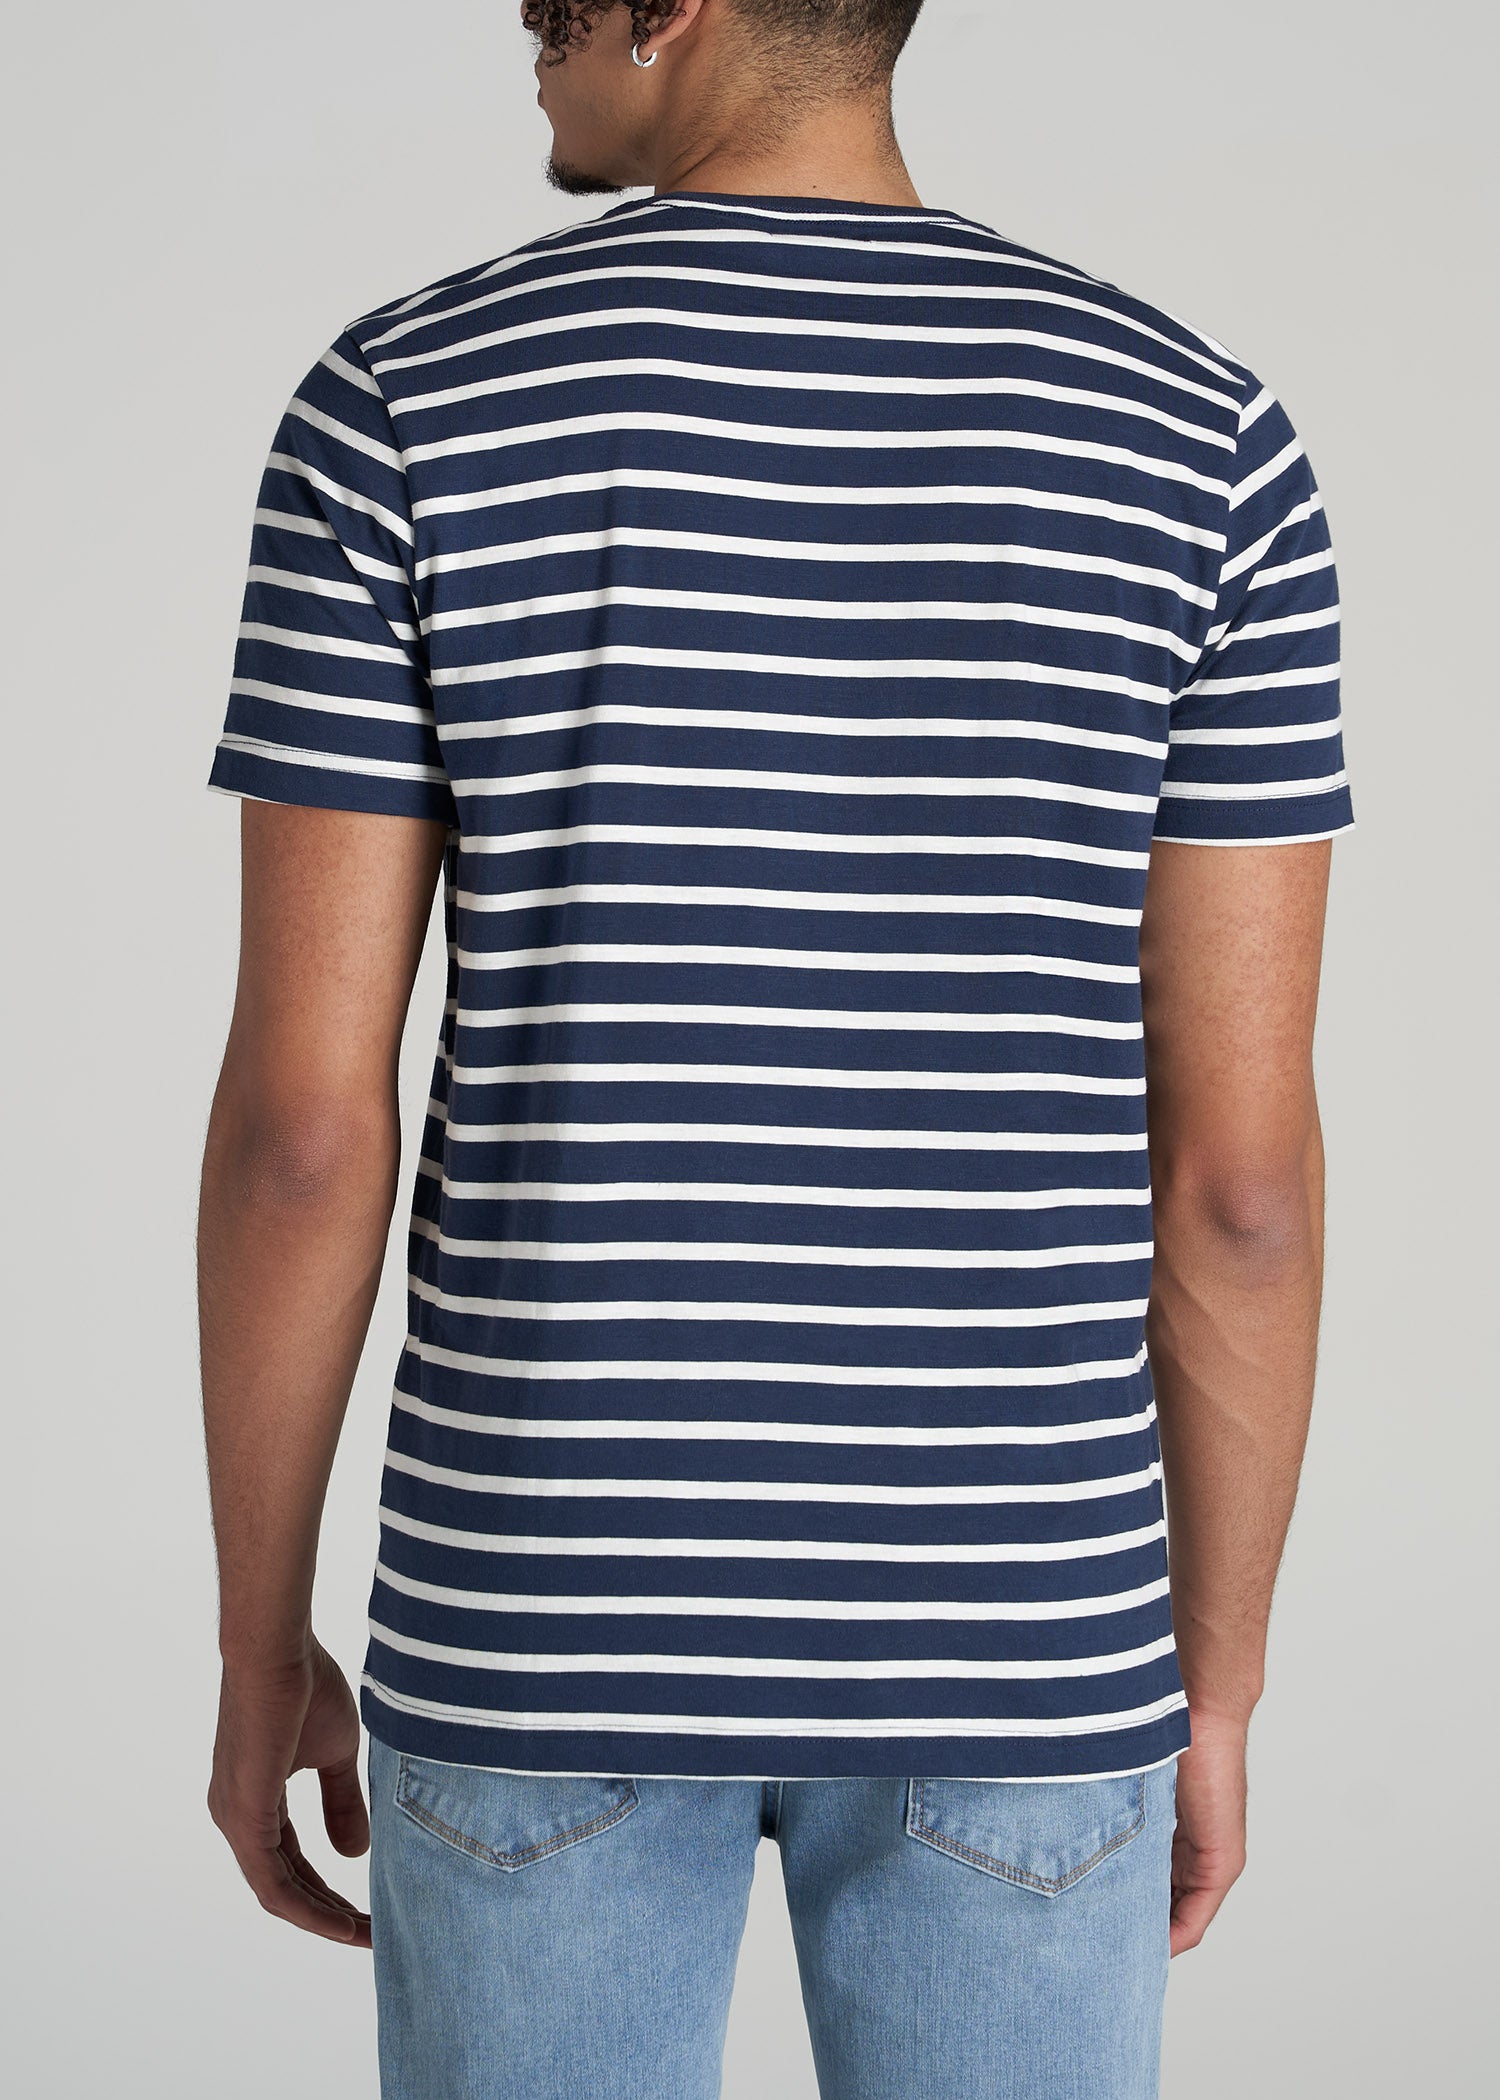 Striped T Shirt Men's: Tall Navy & White Striped Tee | American Tall